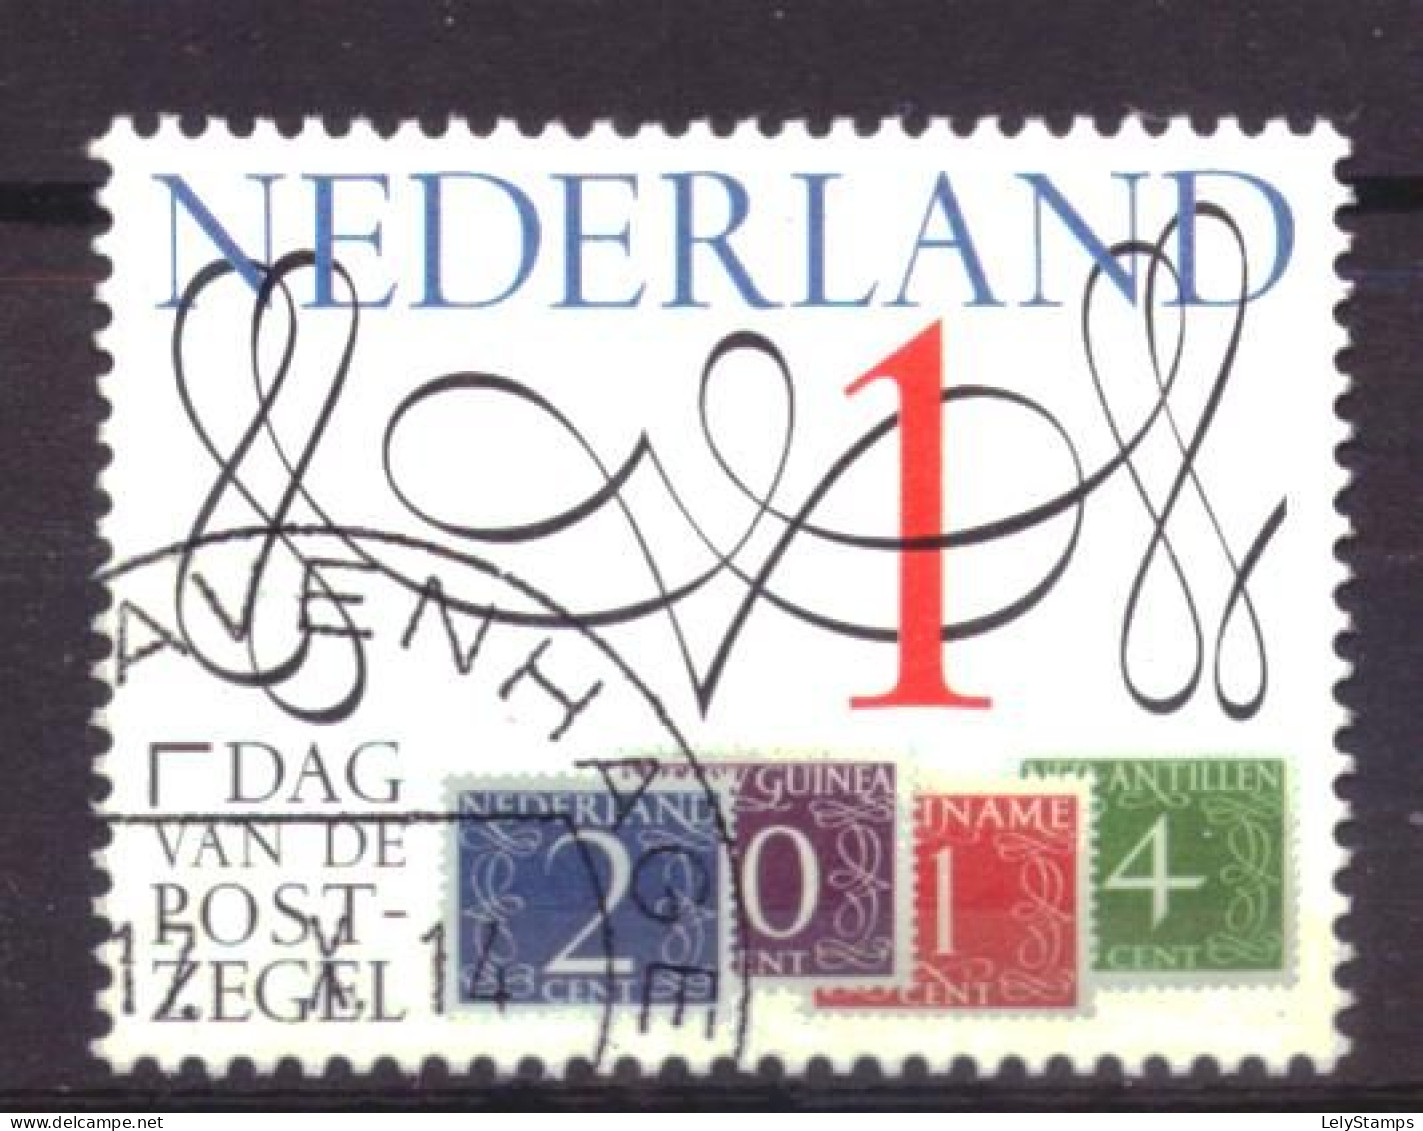 Nederland - Niederlande - Pays Bas NVPH 3234 Used (2014) - Gebruikt